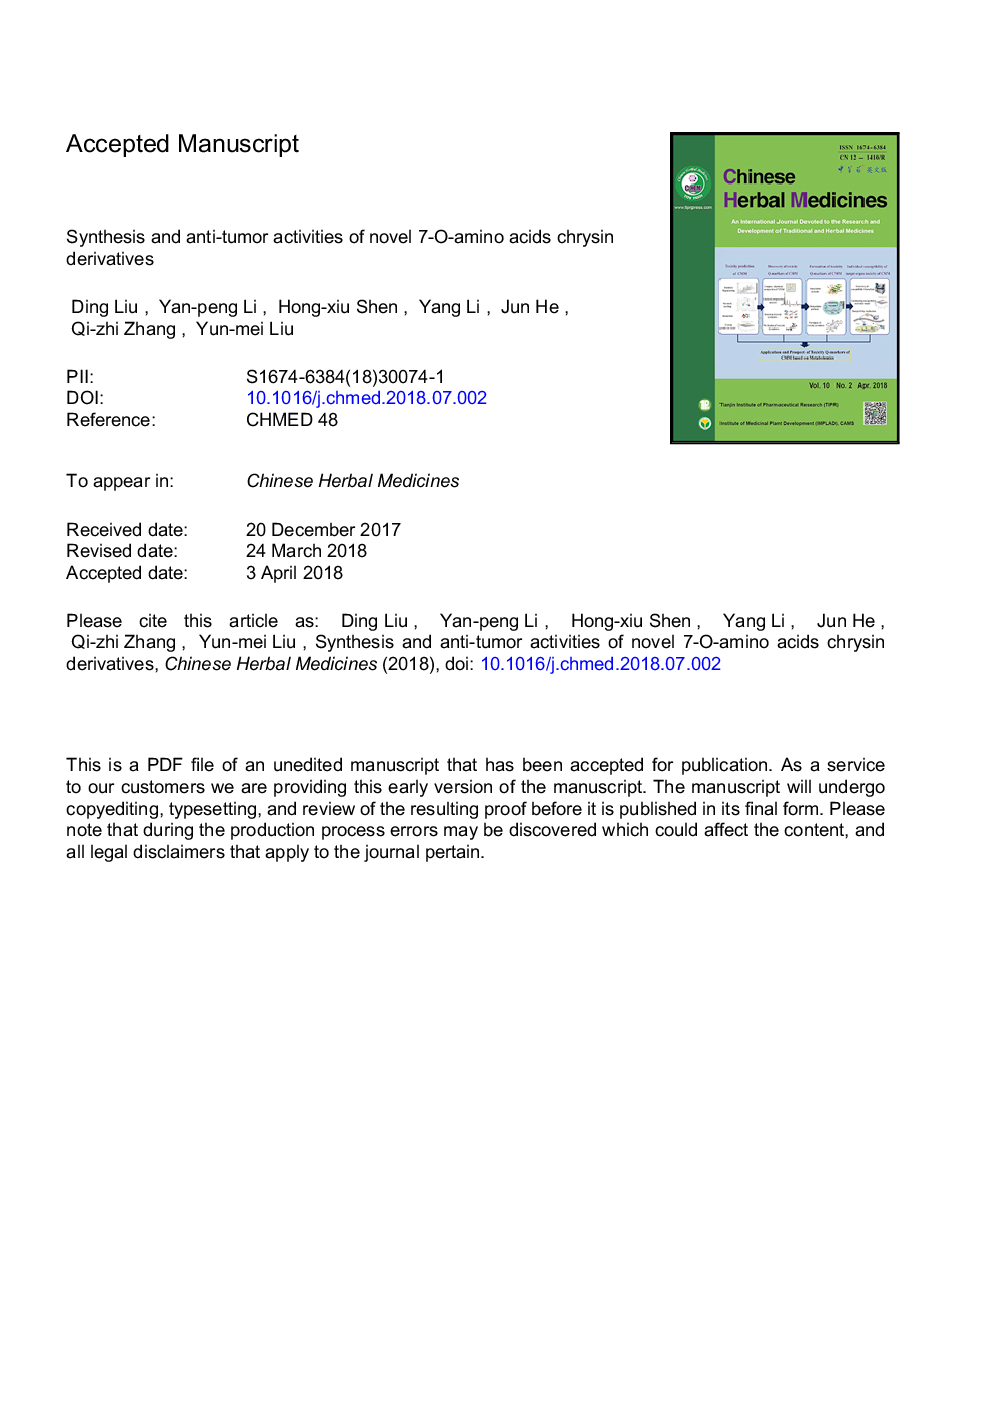 Synthesis and anti-tumor activities of novel 7-O-amino acids chrysin derivatives